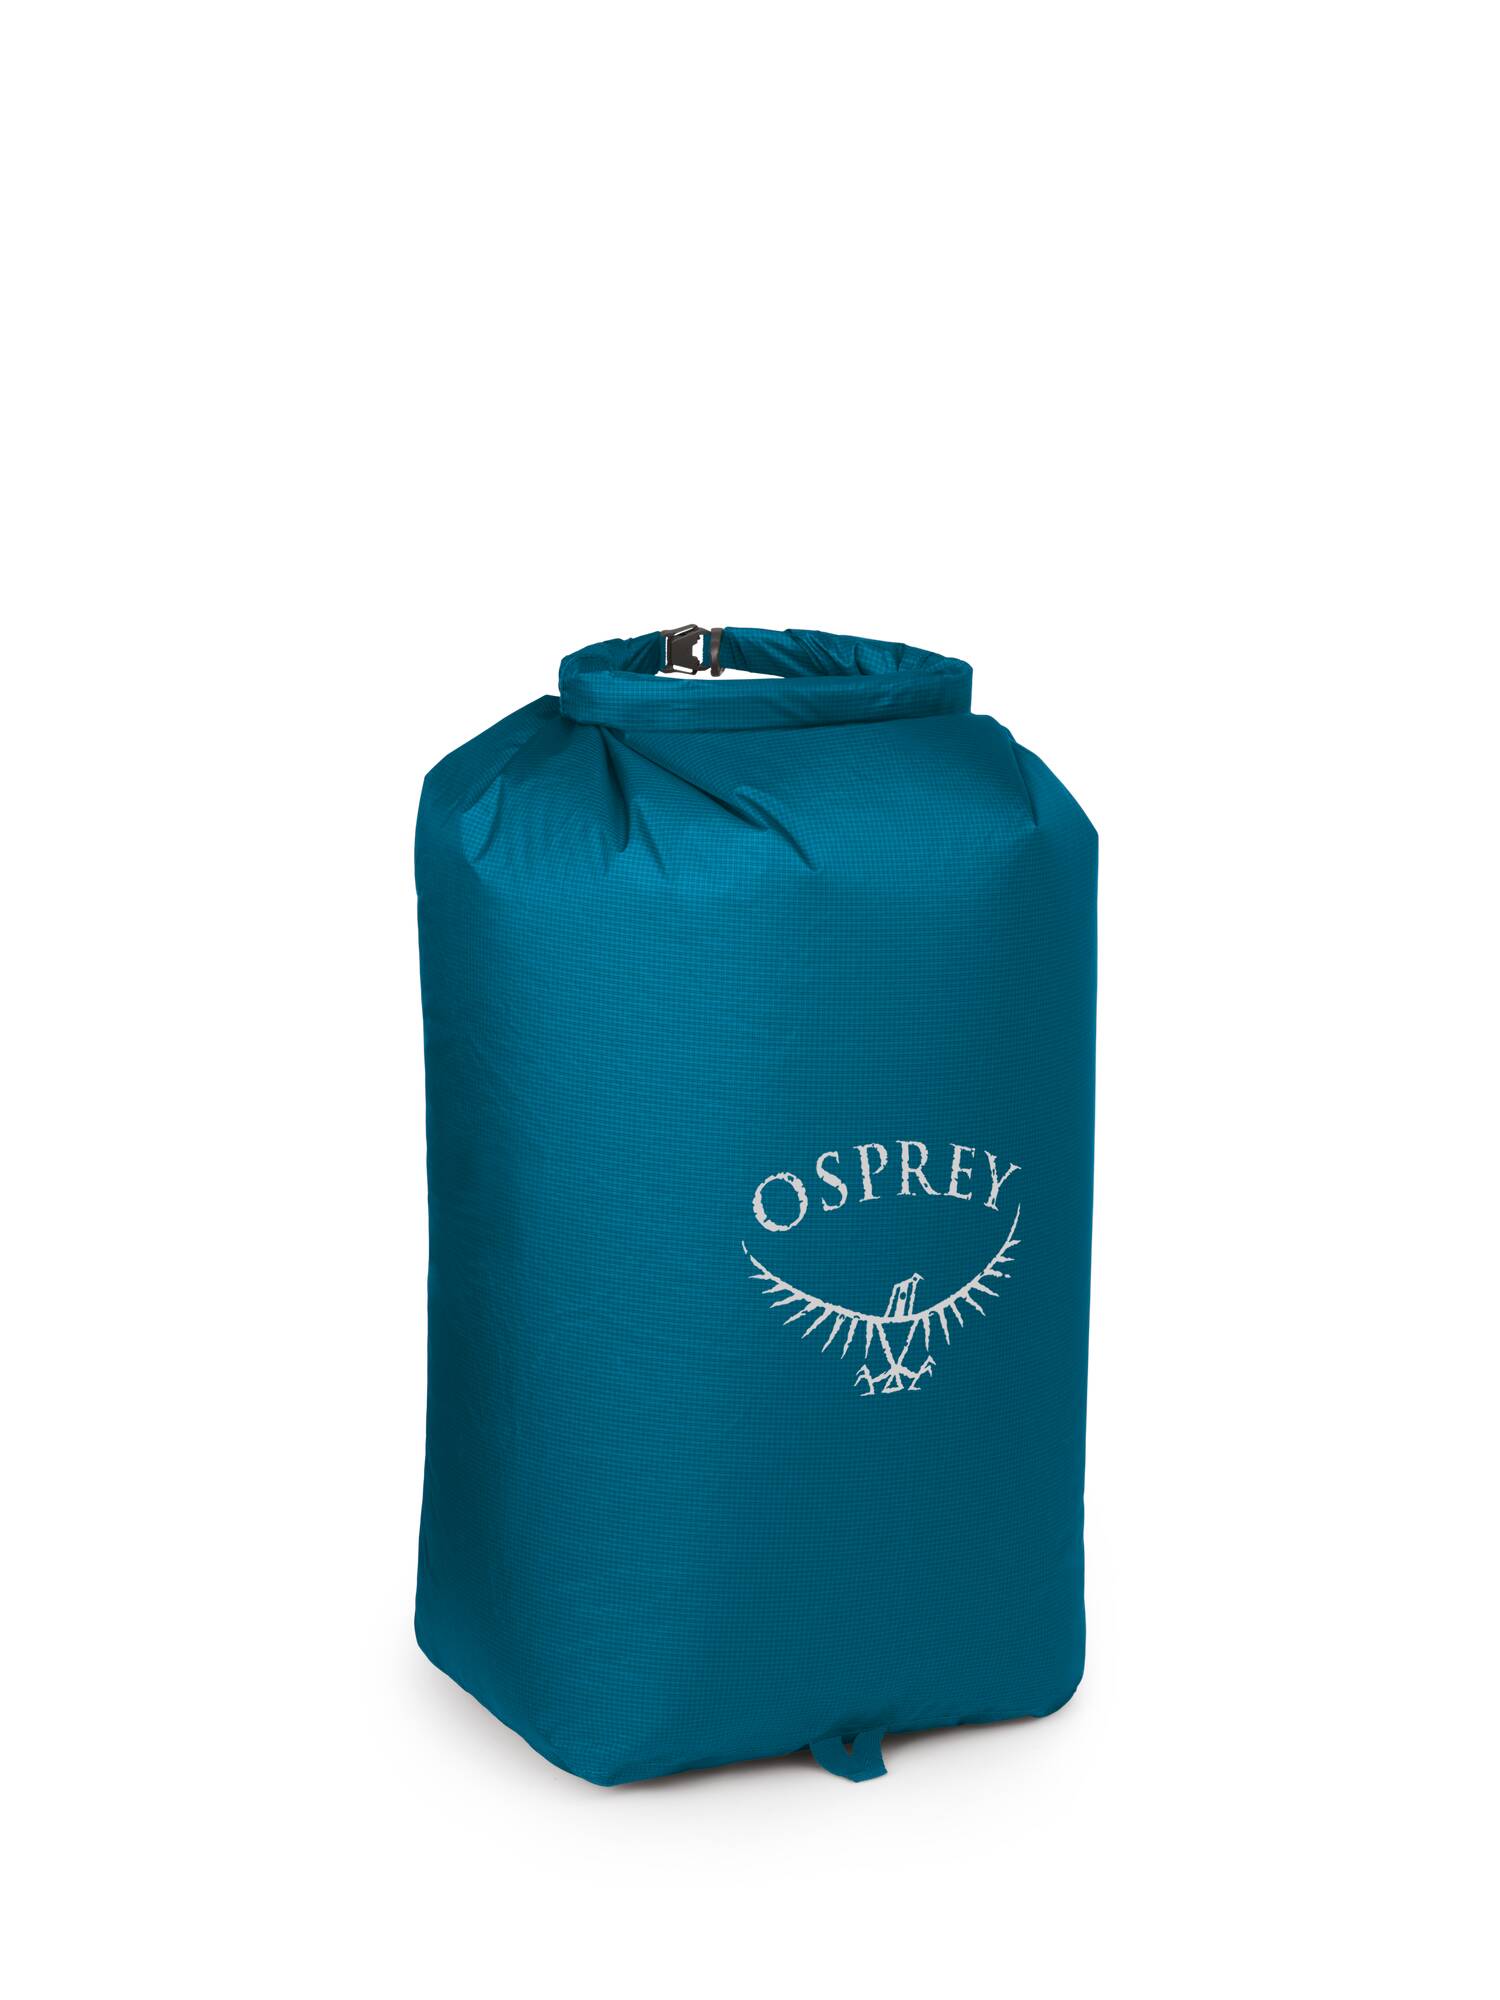 Osprey Ultralight Drysack 35L